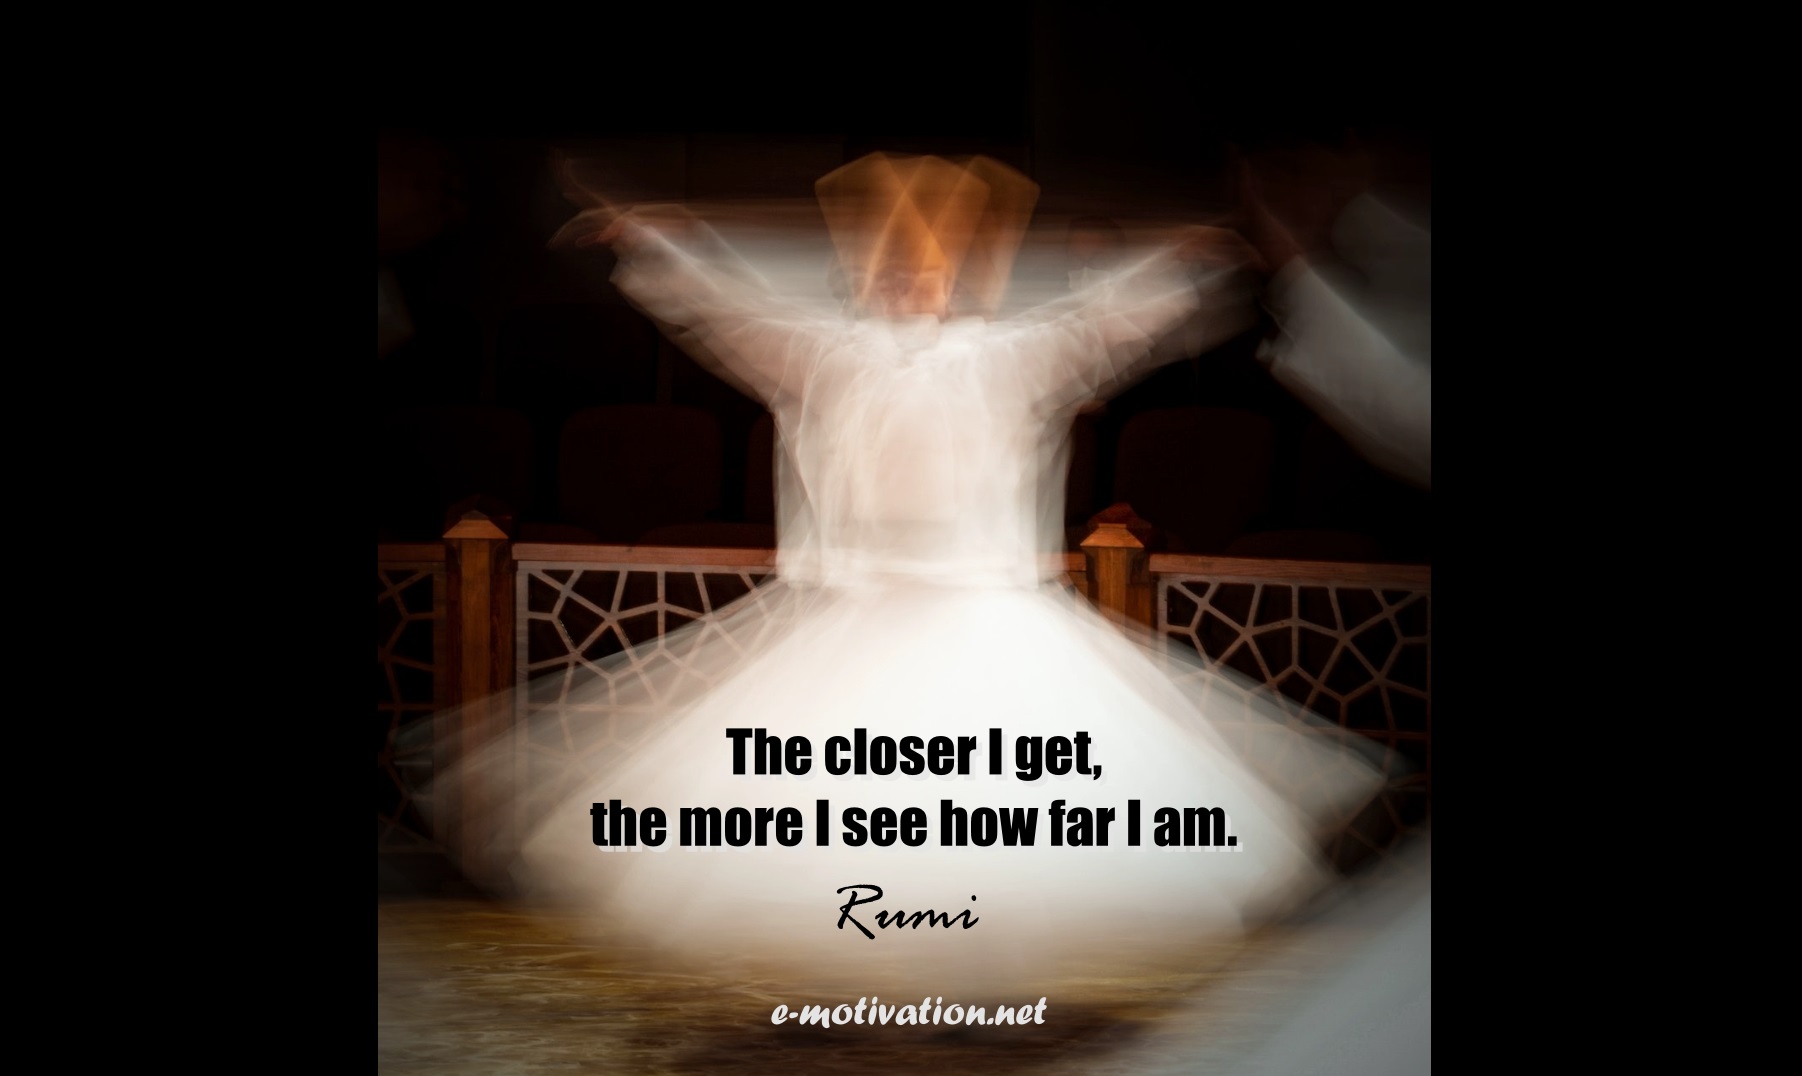 "The closer I get, the more I see how far I am." Rumi